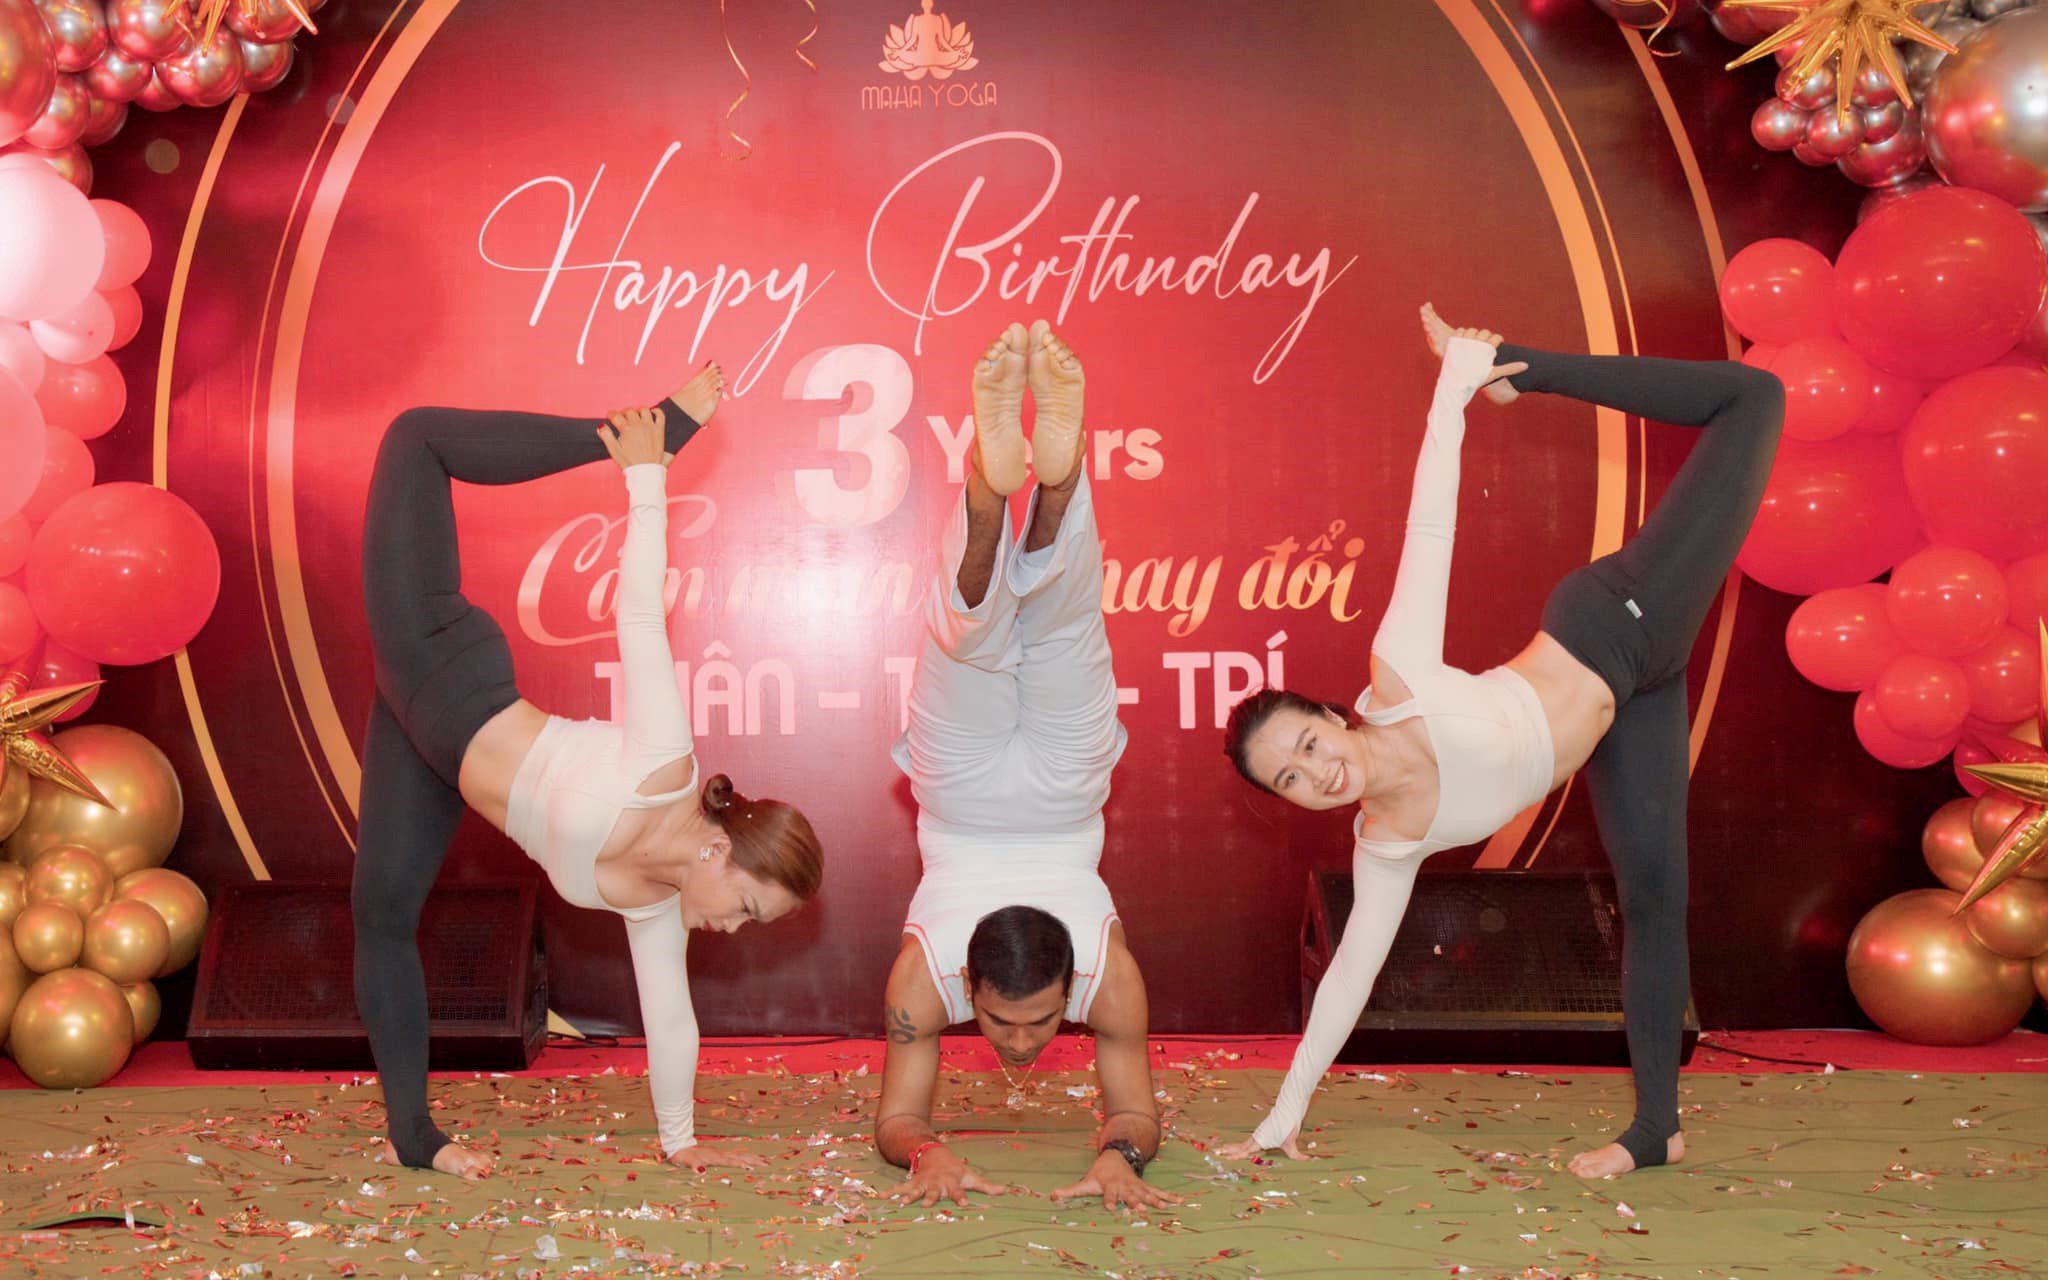 Sinh nhật Maha Yoga tròn 3 tuổi